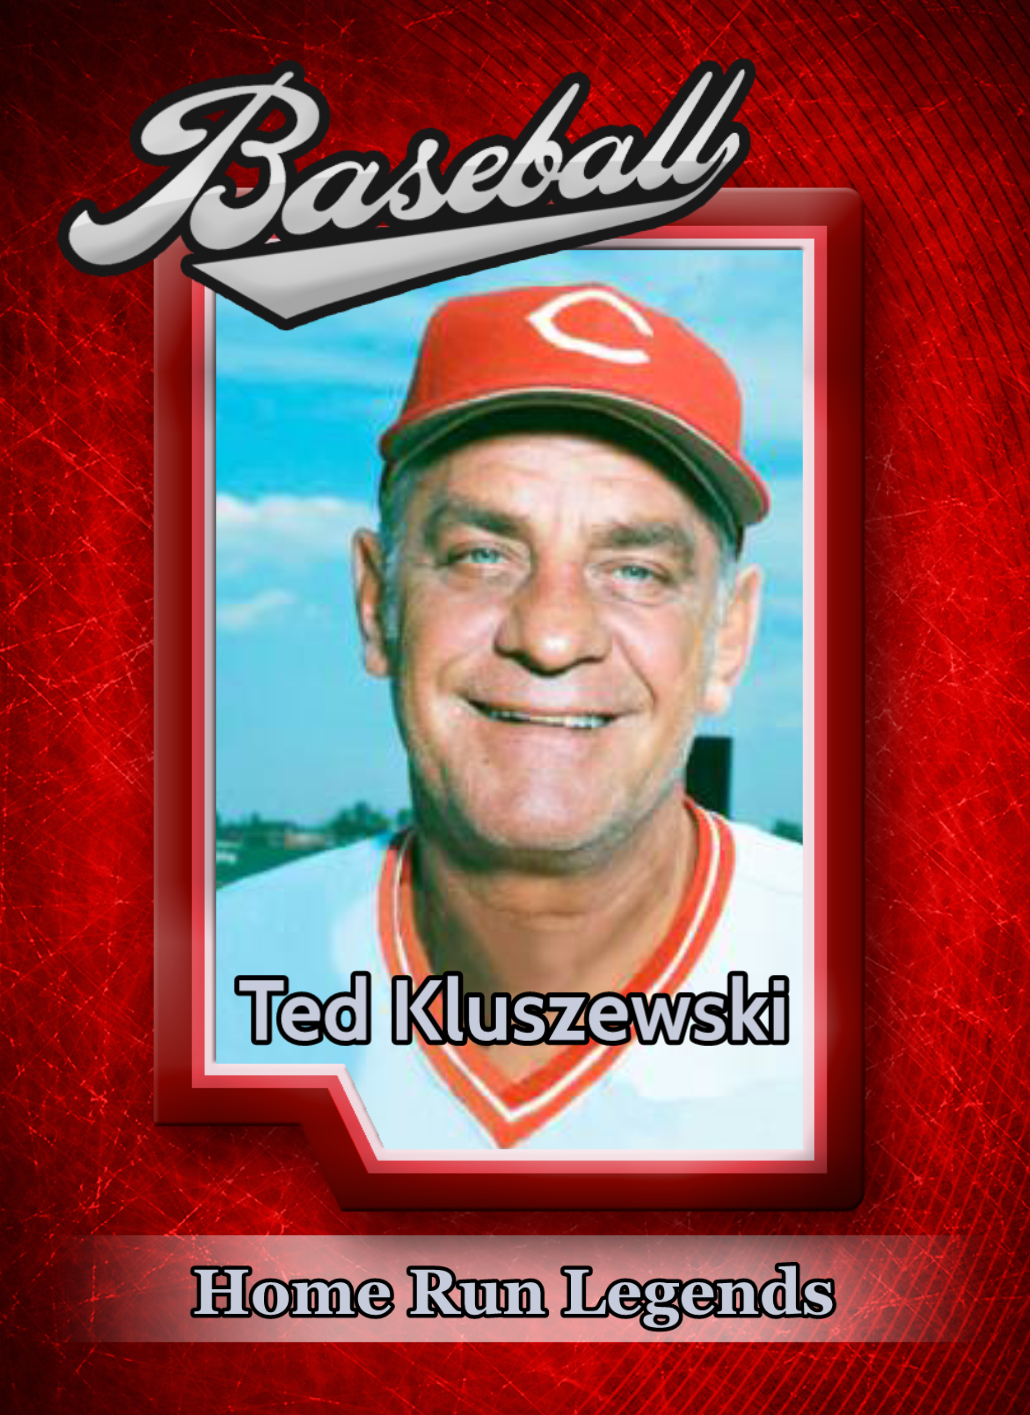 The Legend of Ted Kluszewski